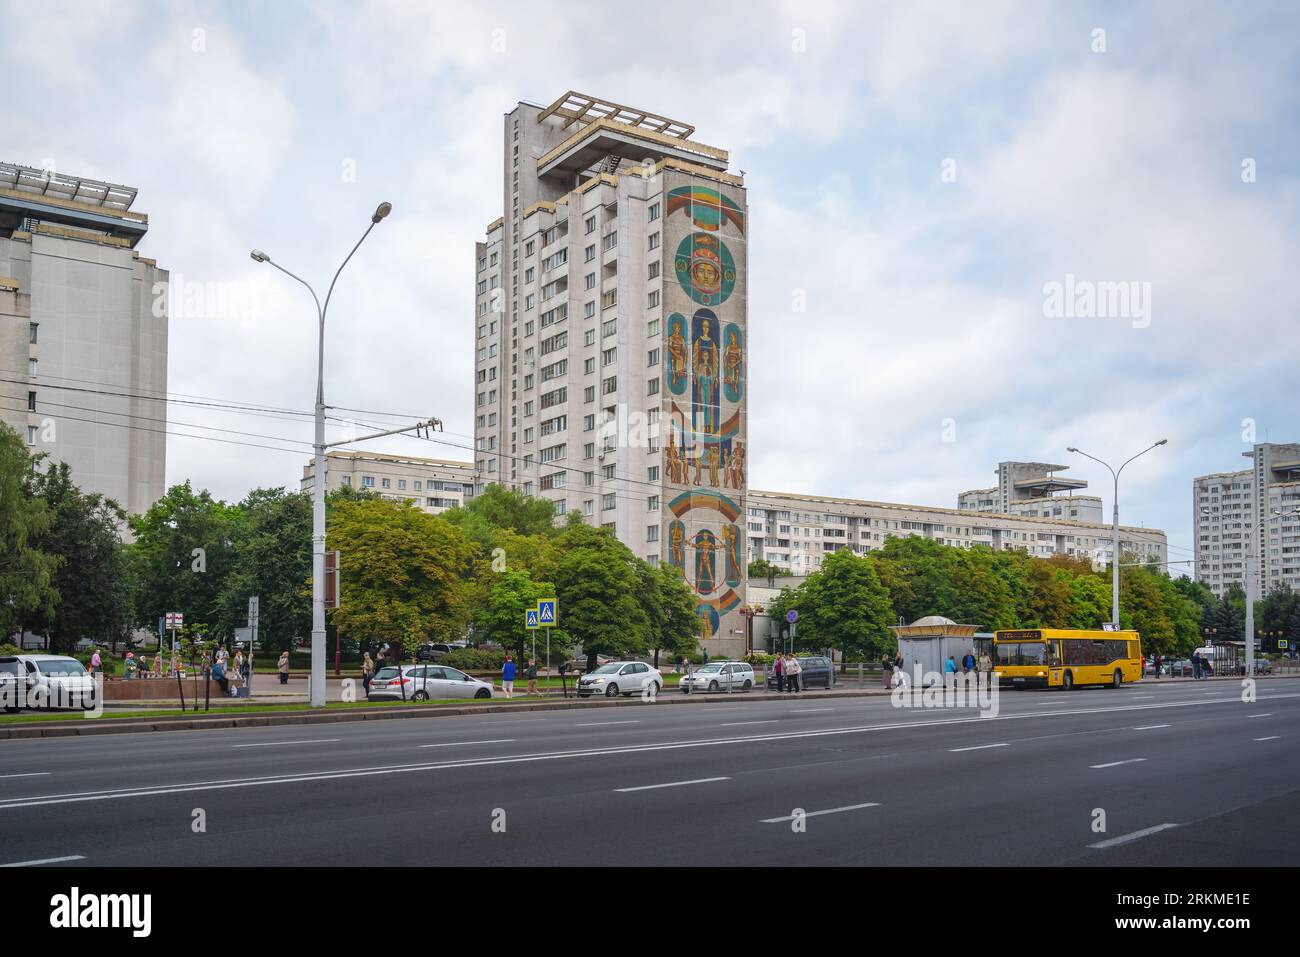 Soviet Era Buildings with City of Science Mosaic by Alexander Kishchenko - Minsk, Belarus Stock Photo